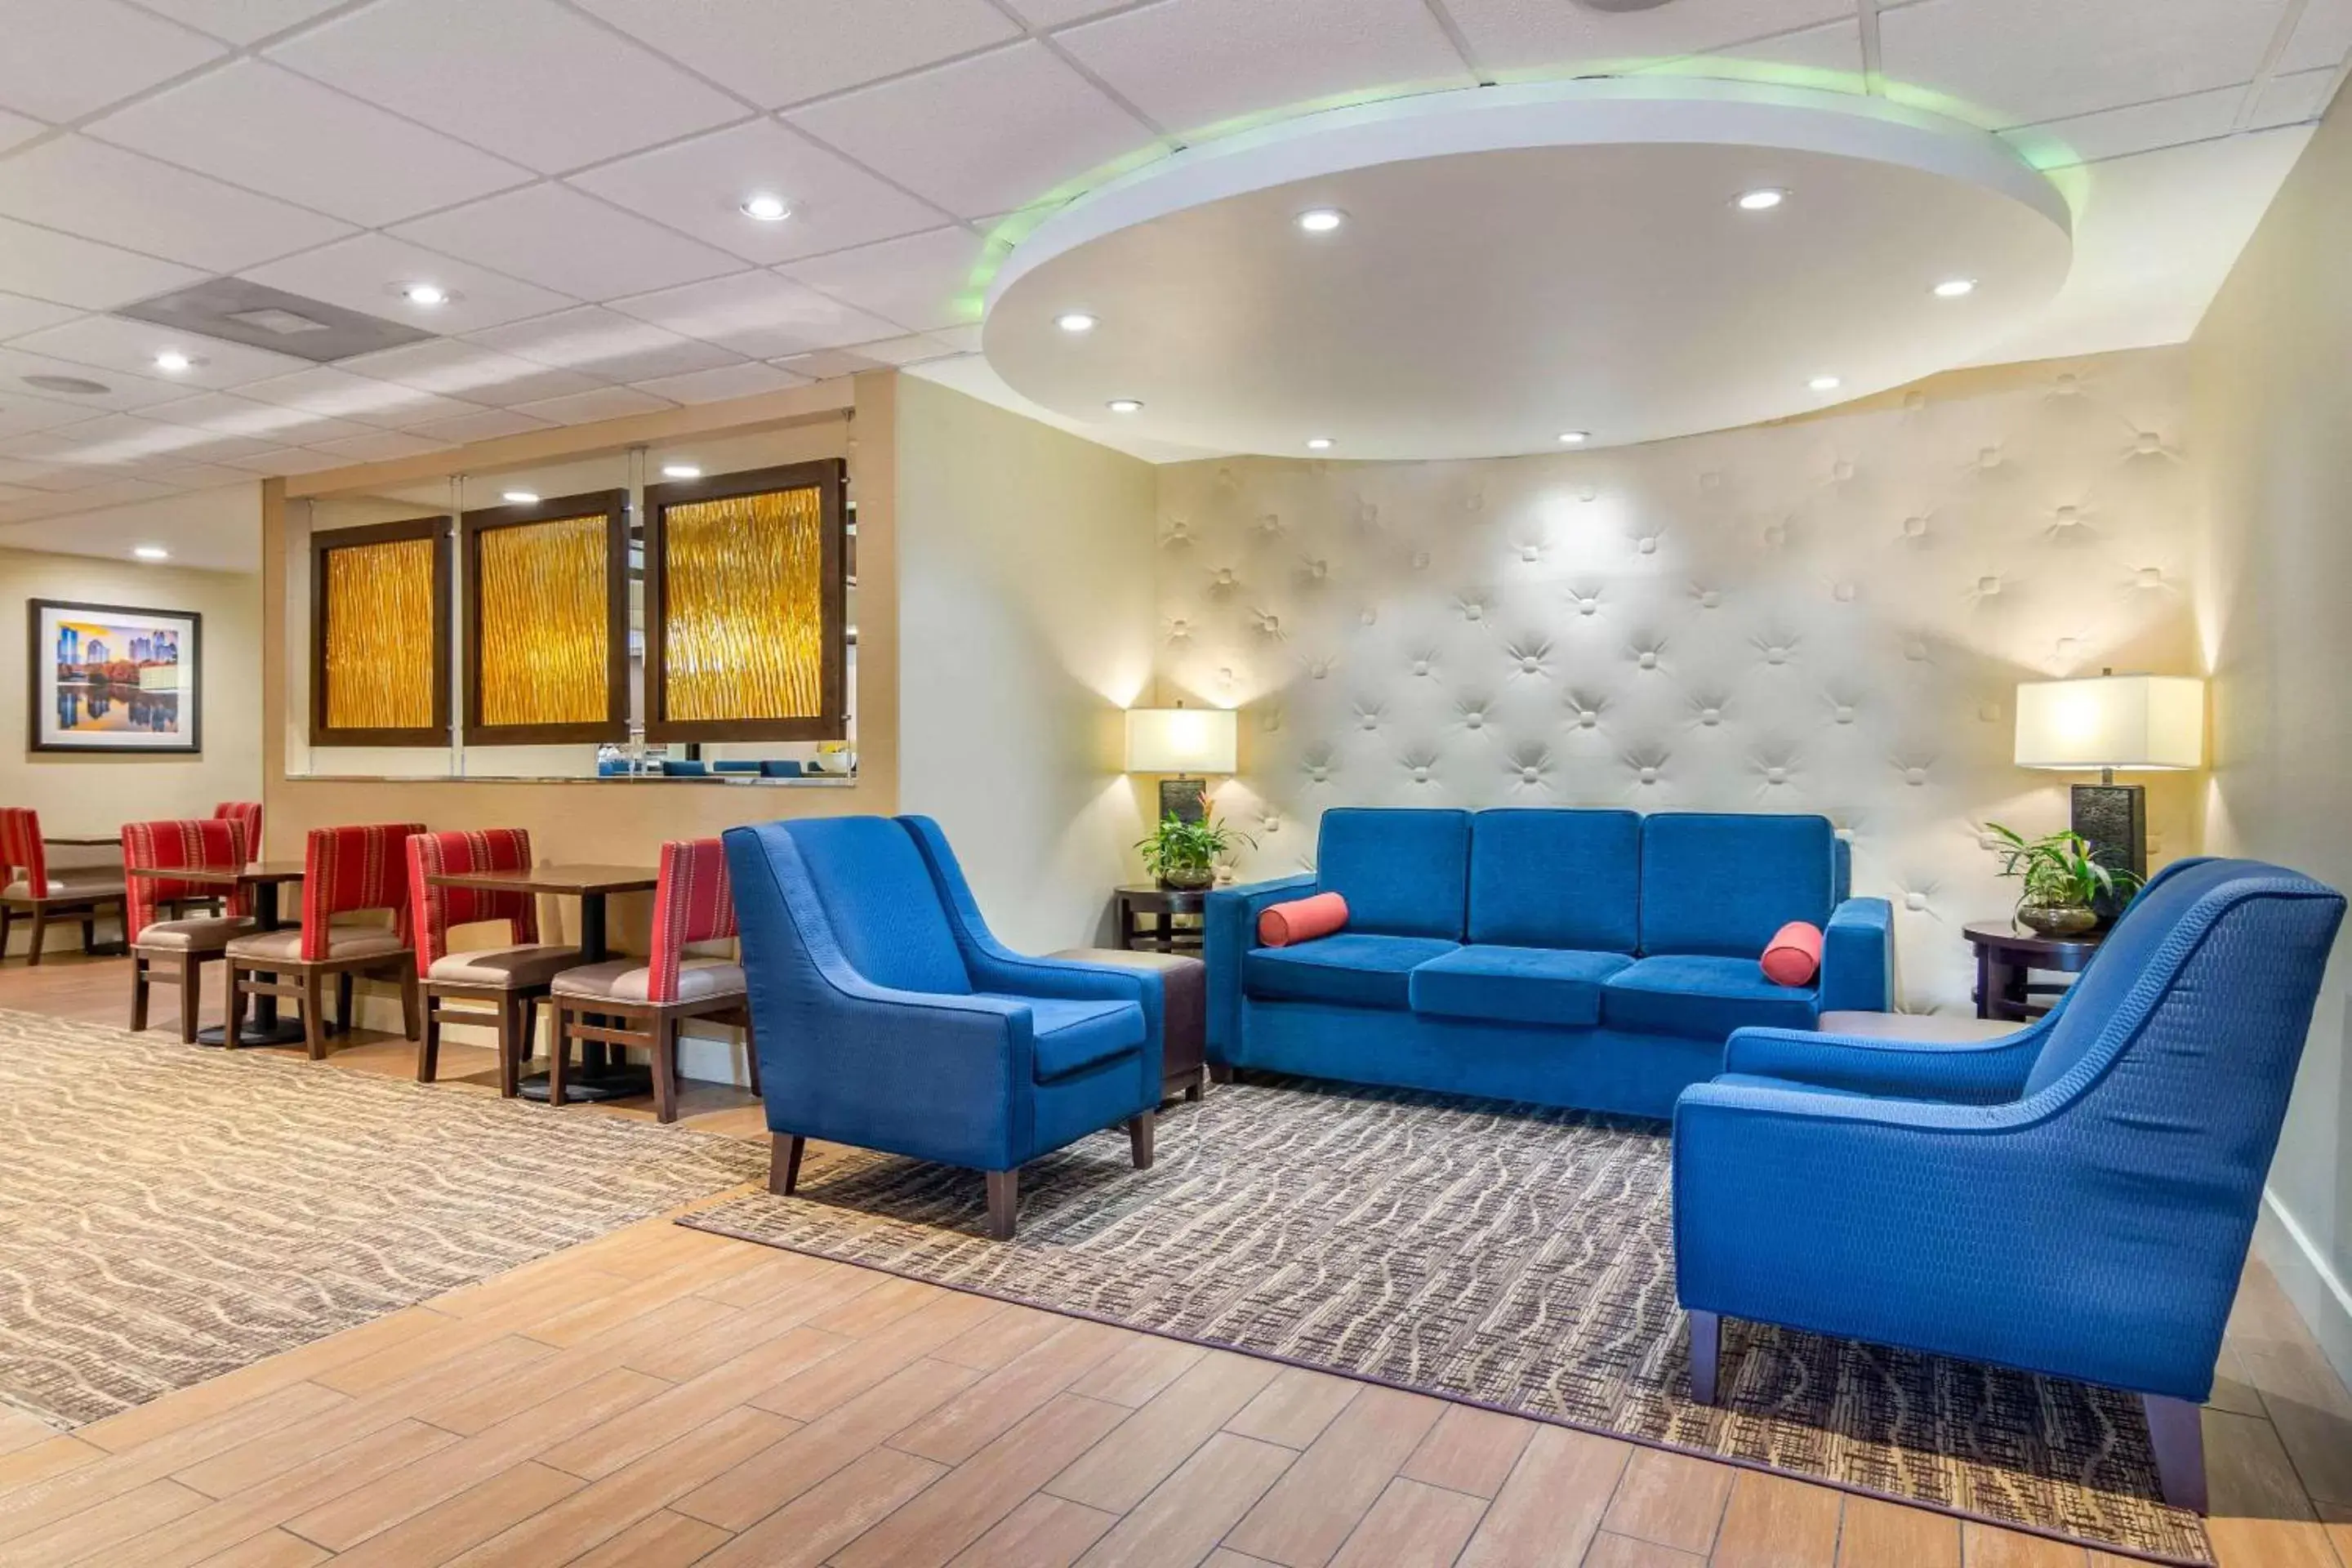 Lobby or reception in Comfort Inn Atlanta Airport